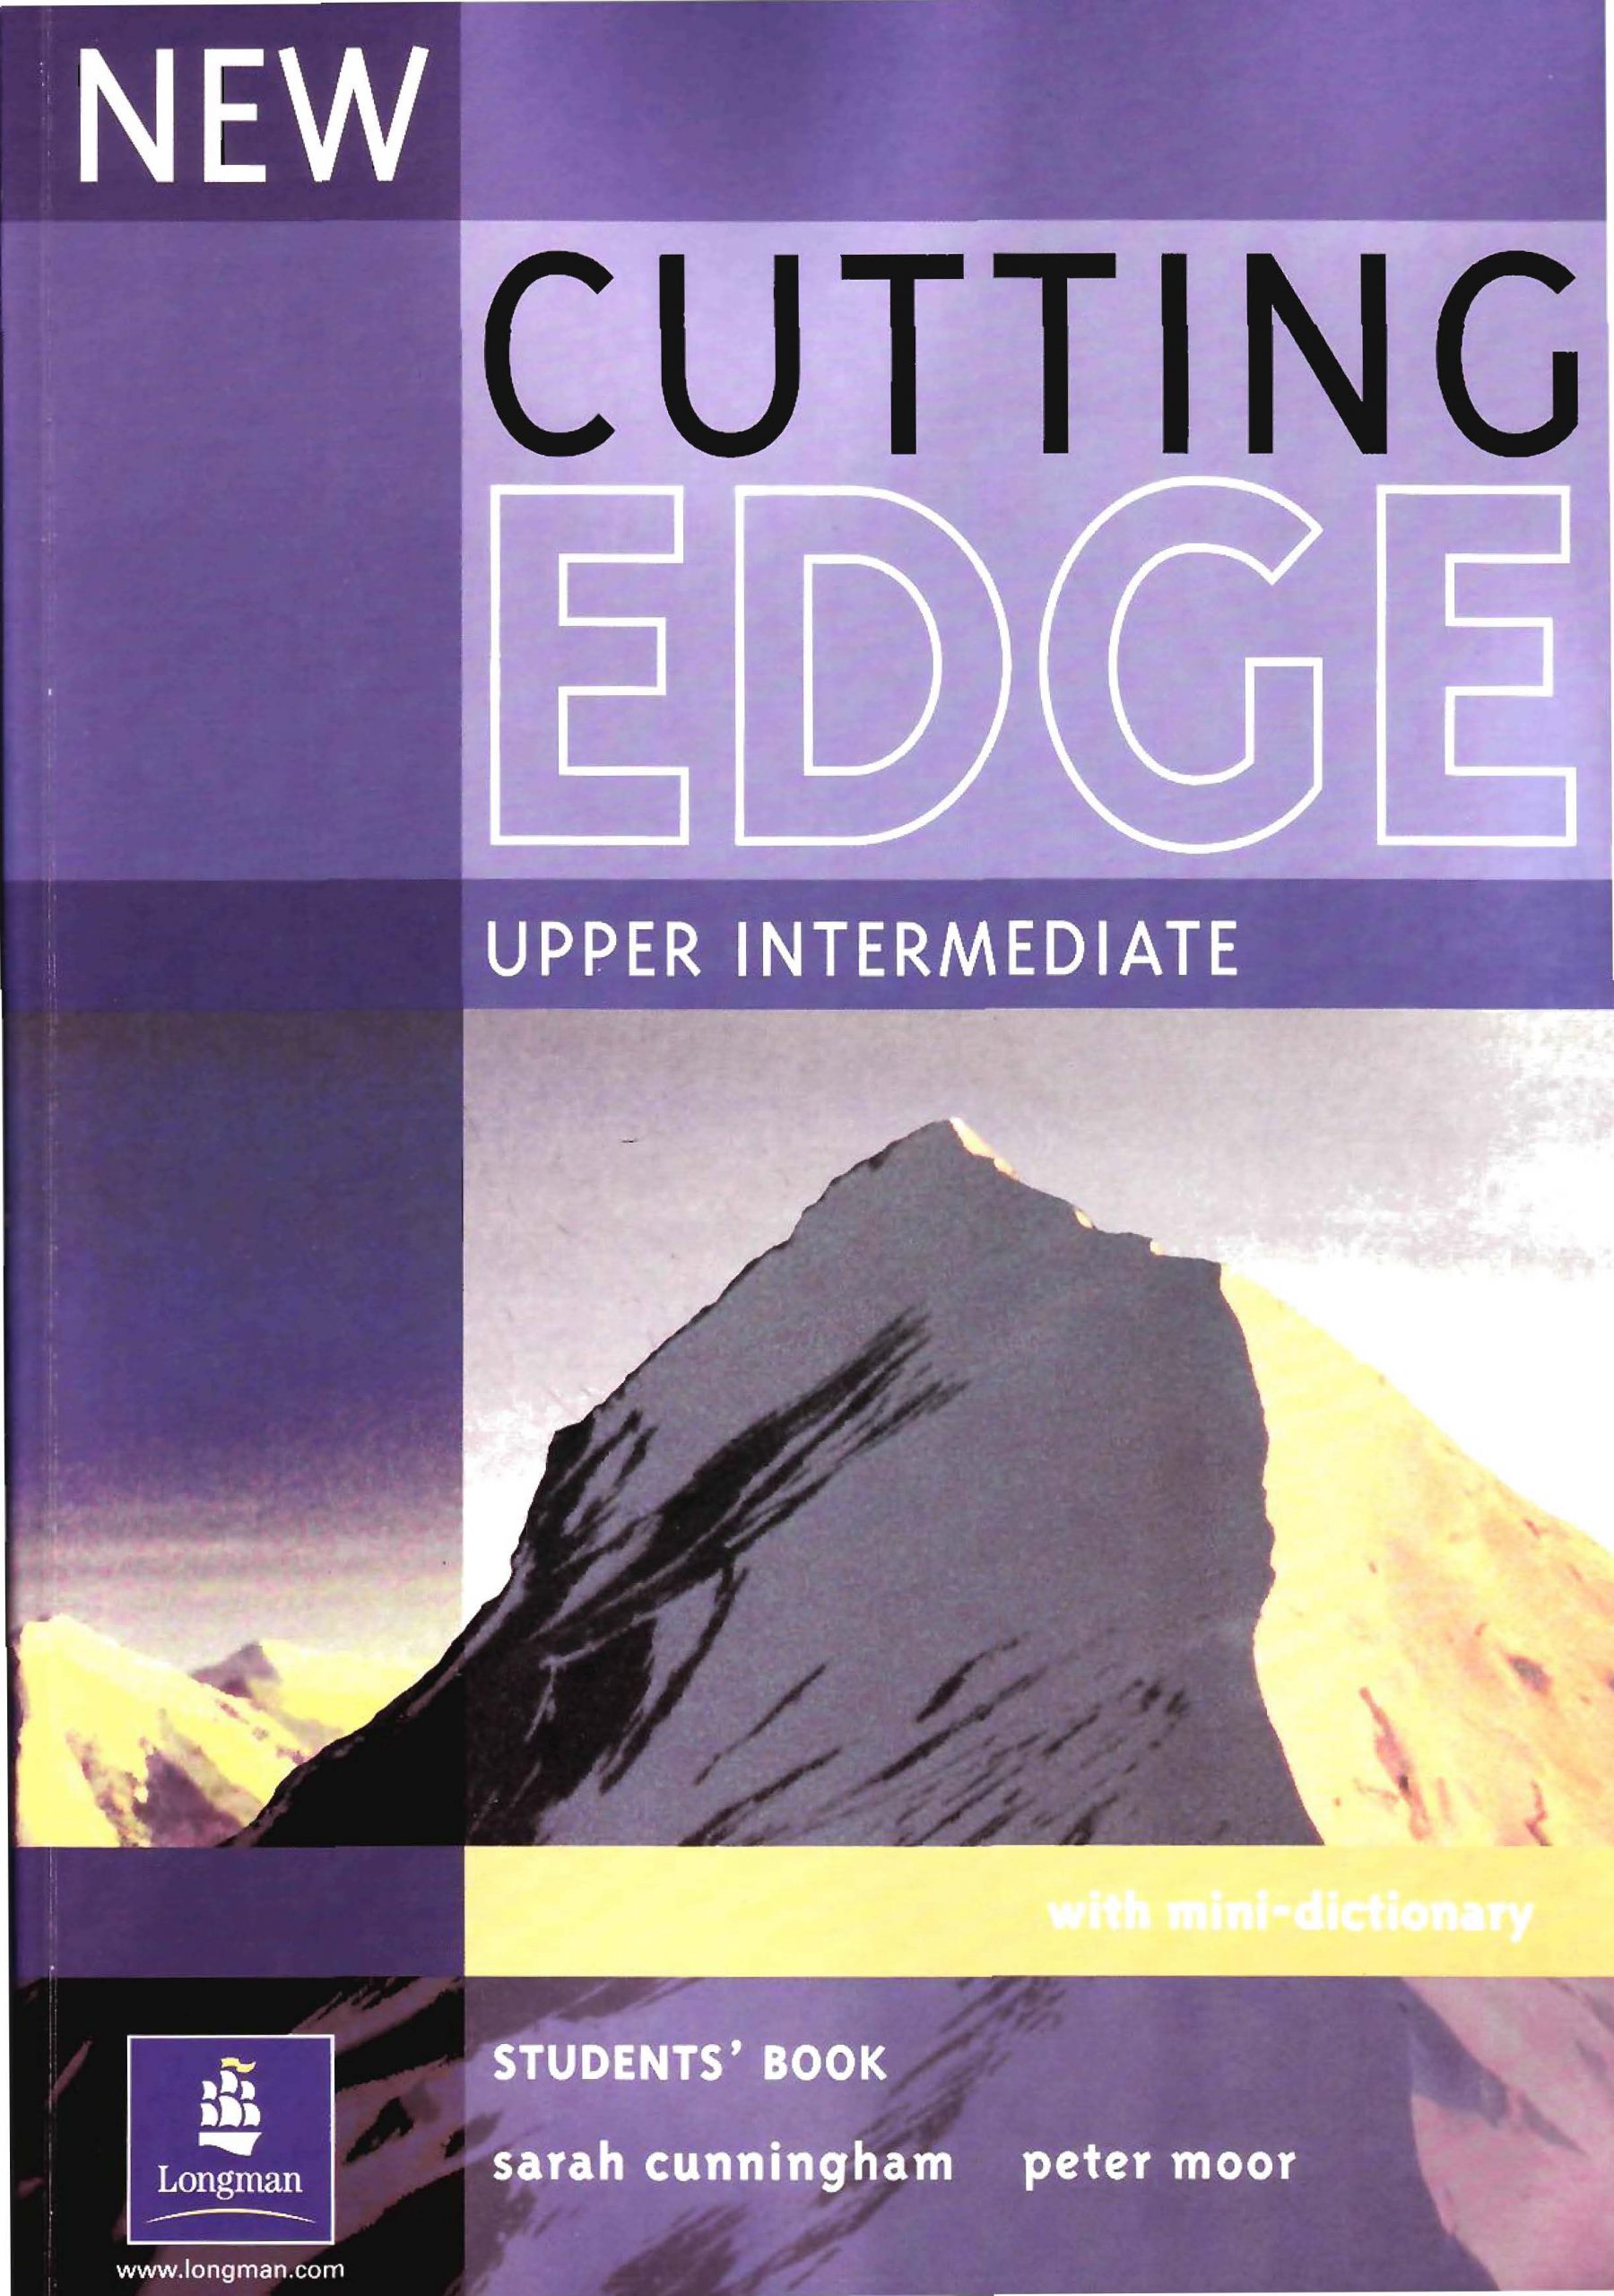 New cutting intermediate. New Cutting Edge учебник. New Cutting Edge Upper Intermediate student's book. Cutting Edge Upper Intermediate. Учебник английского pre-Intermediate Cutting Edge.